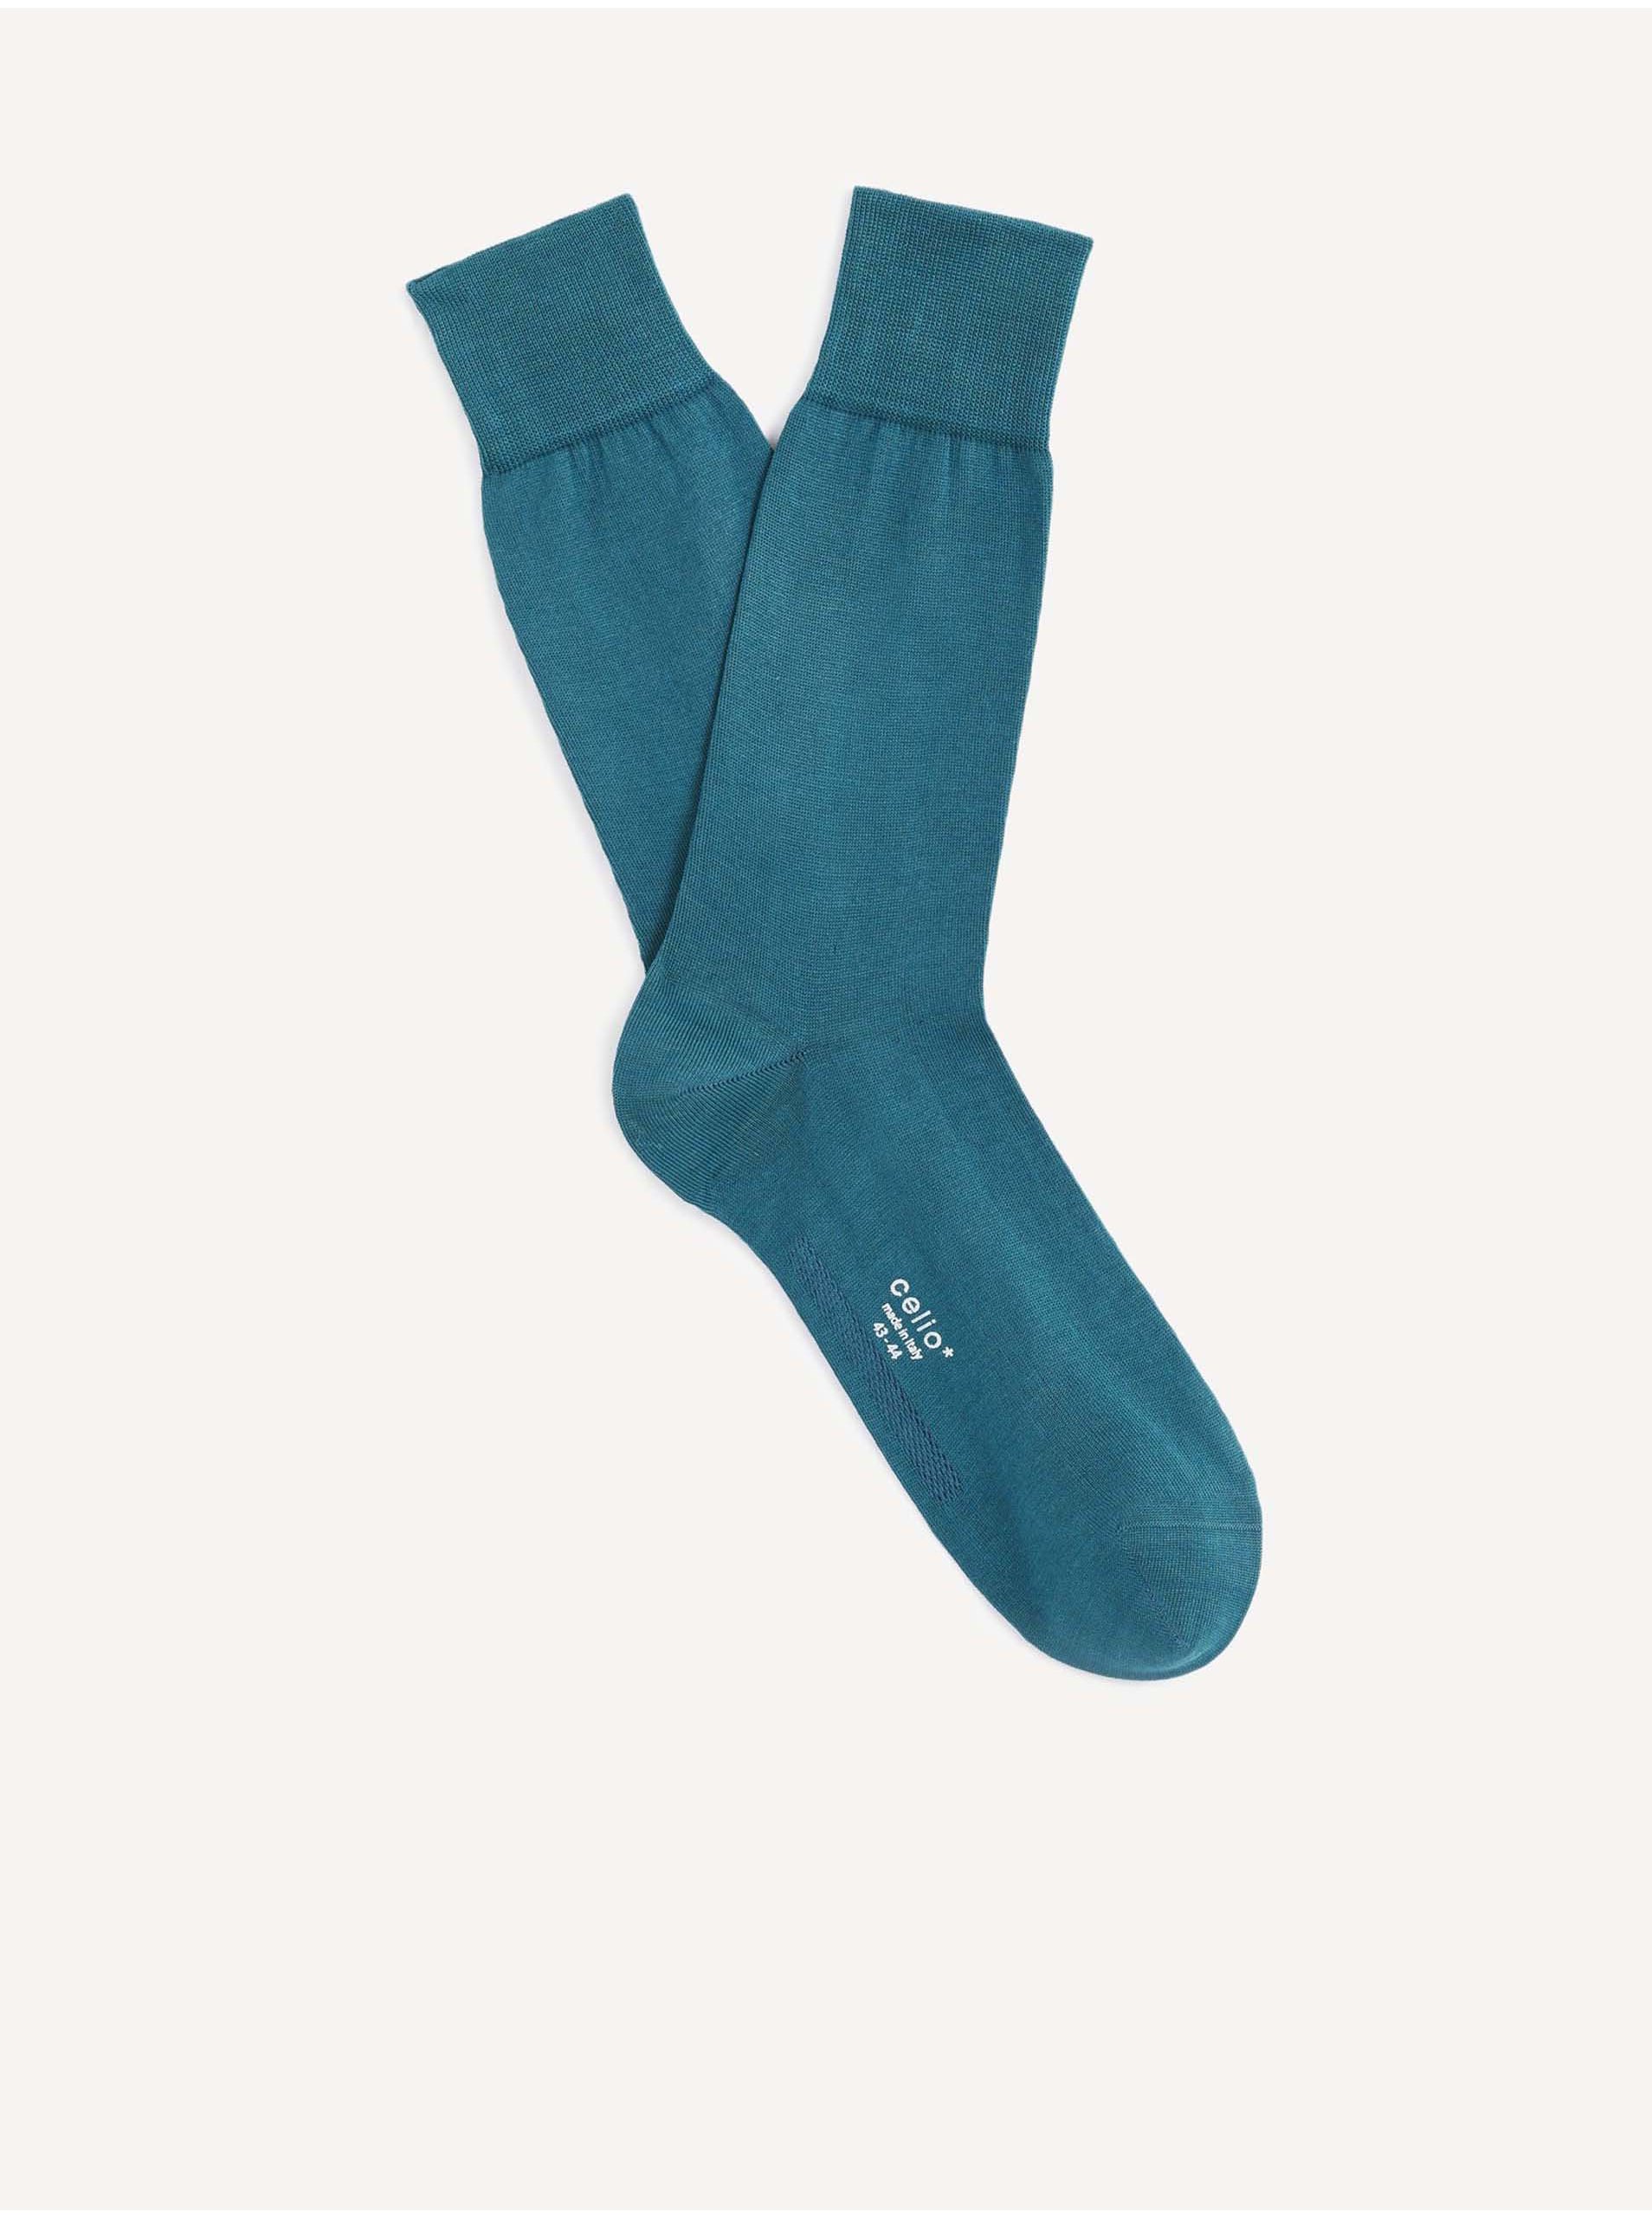 Lacno Modré ponožky Celio Sicosse